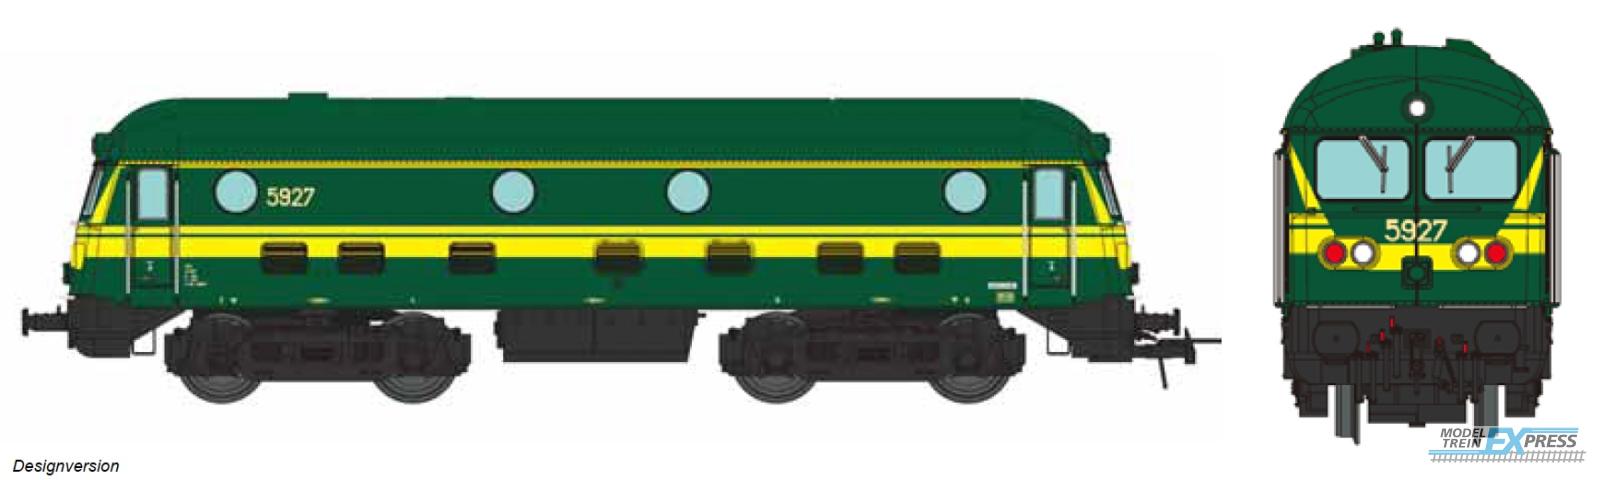 B-Models 9310.01 Diesel 5927, DC. 2-Rail